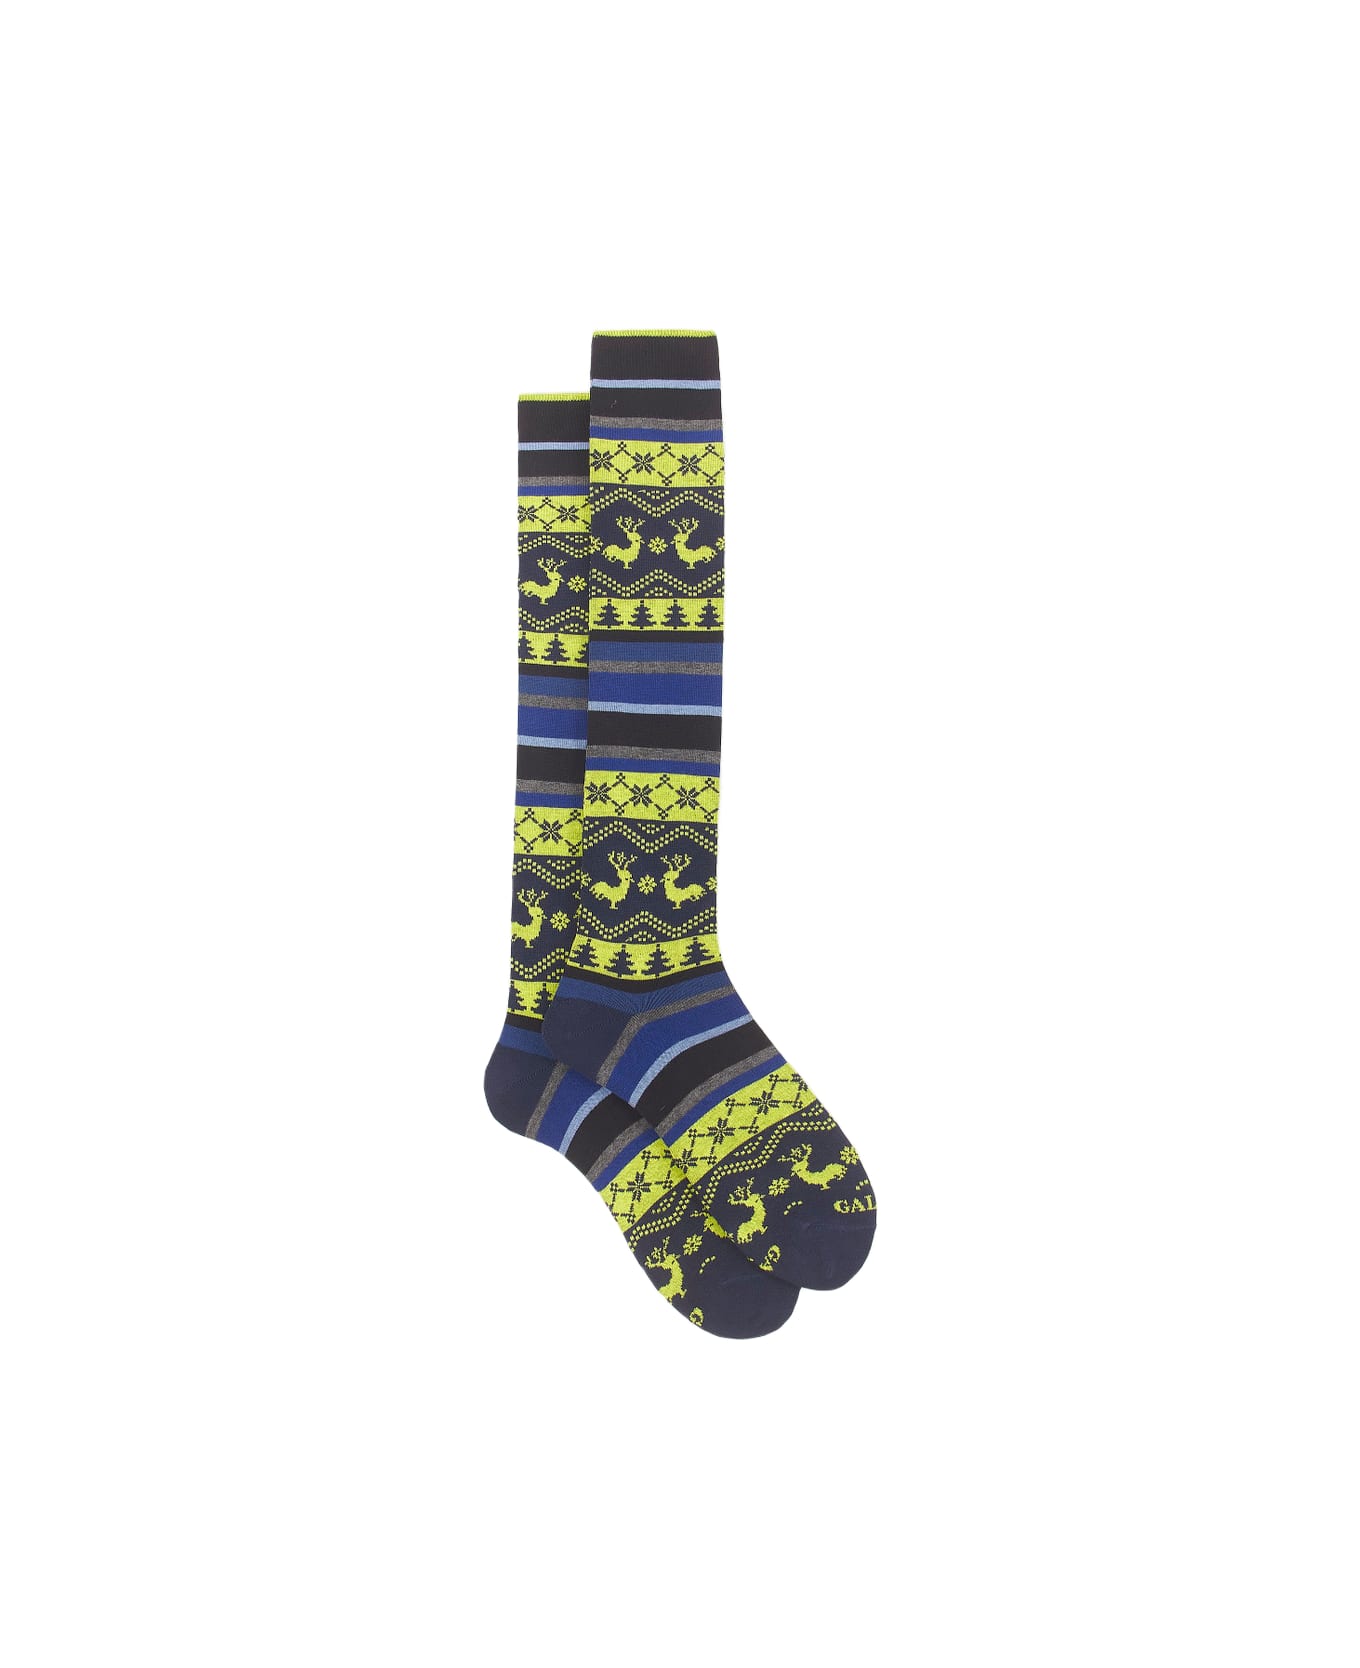 Gallo Socks - Blu